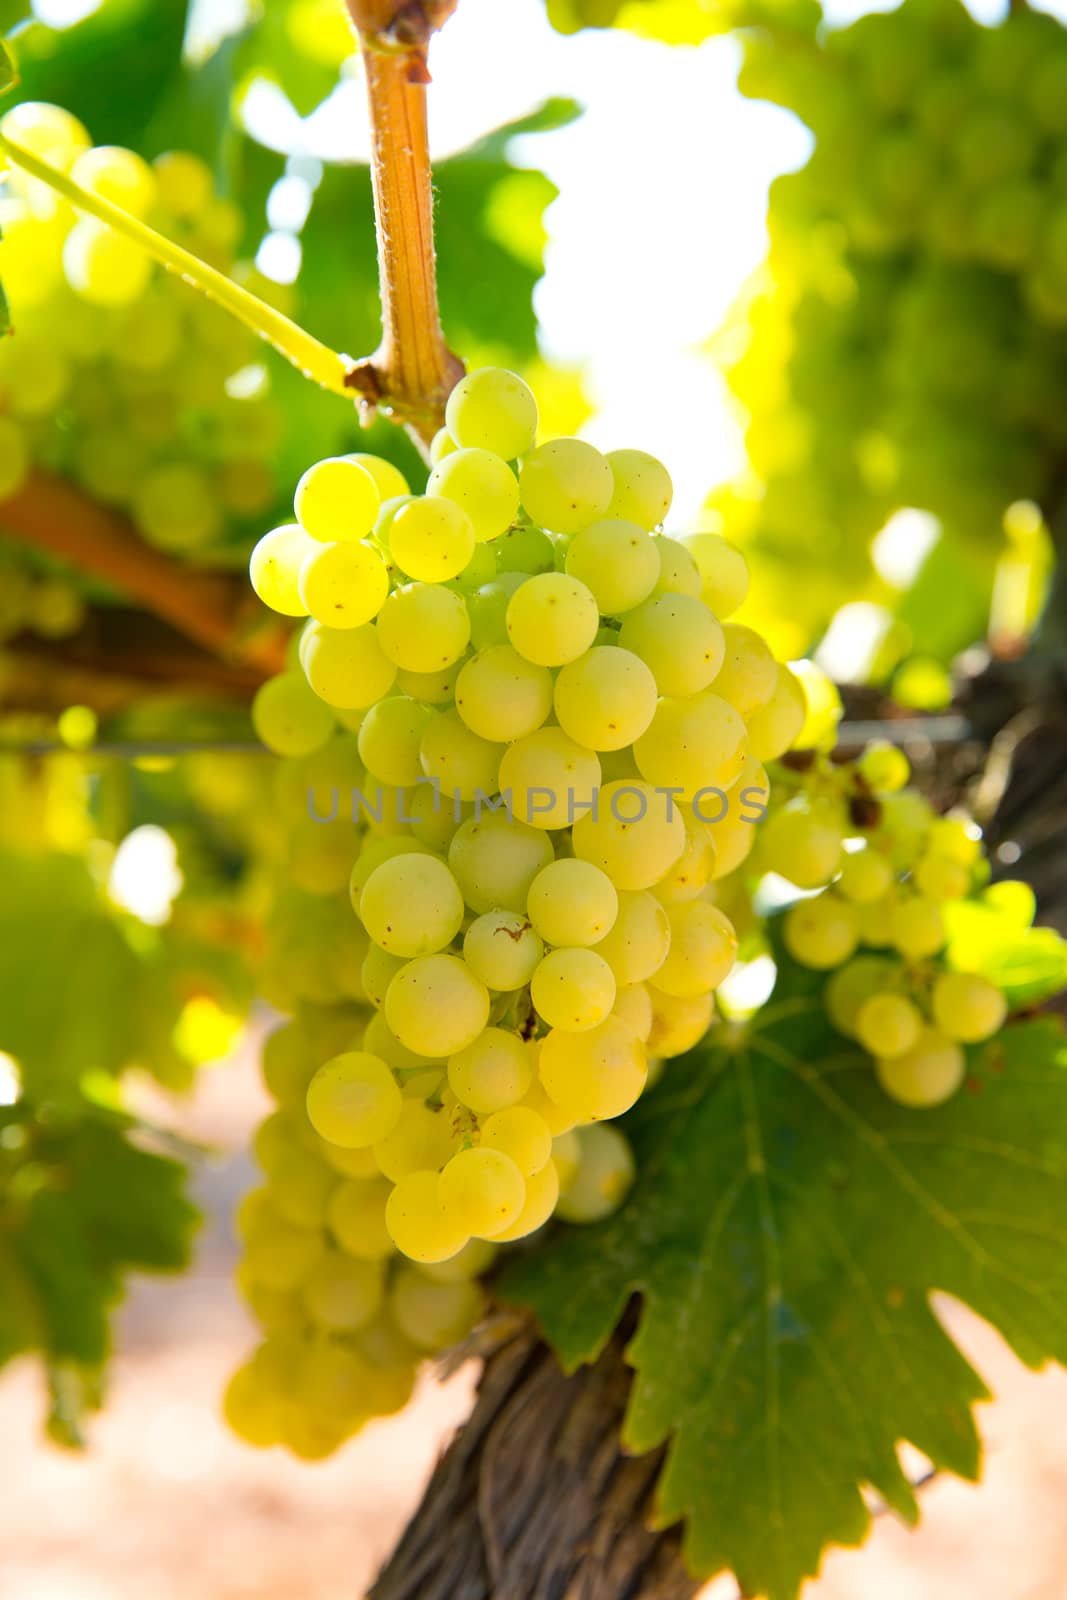 chardonnay Wine grapes in vineyard raw ready for harvest in Mediterranean